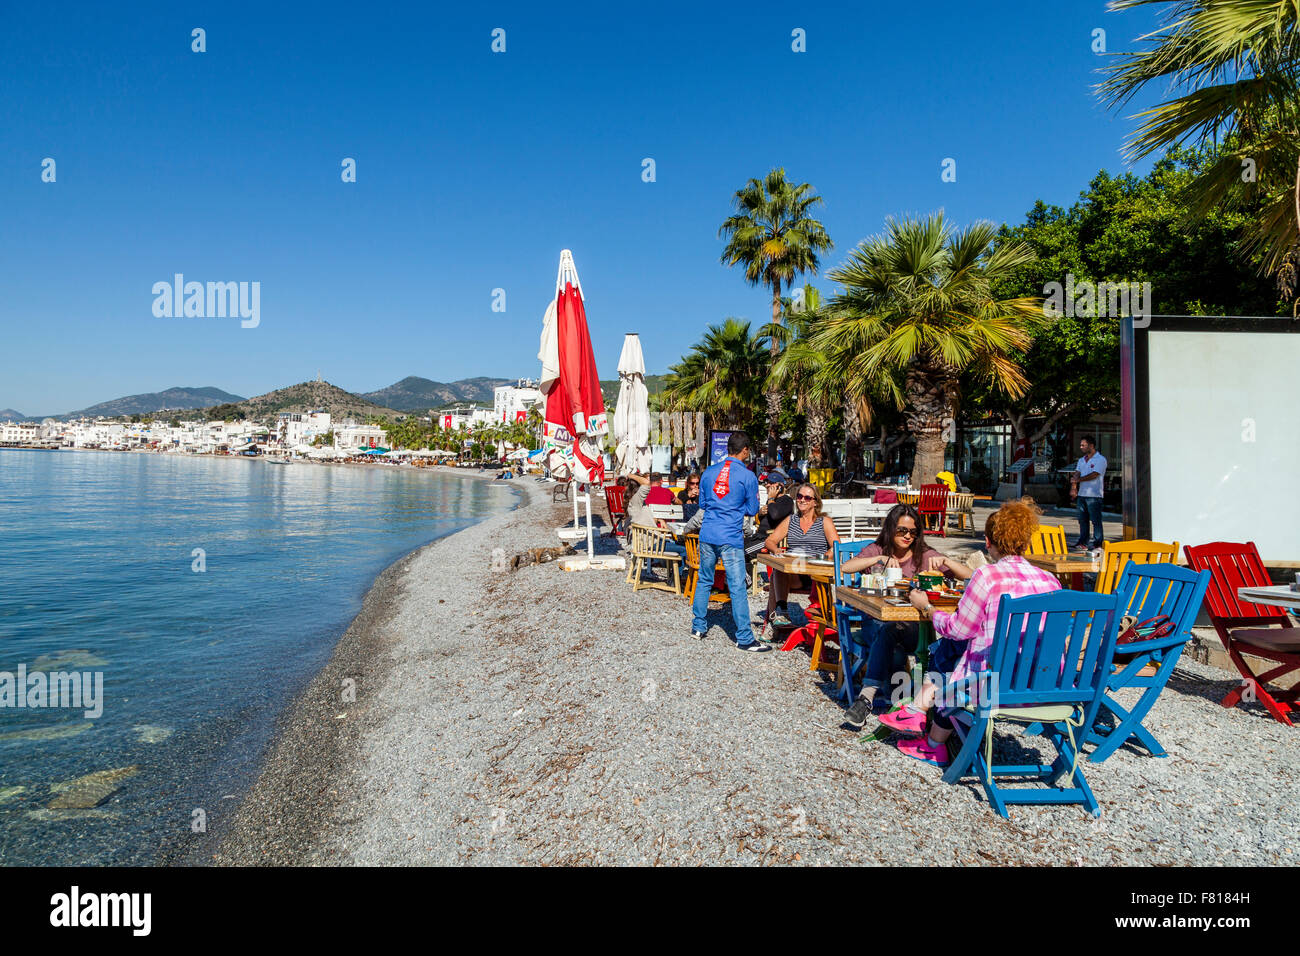 Tourists Eating Breakfast At A Beachside Cafe/Restaurant, Bodrum, Mugla Province, Turkey Stock Photo